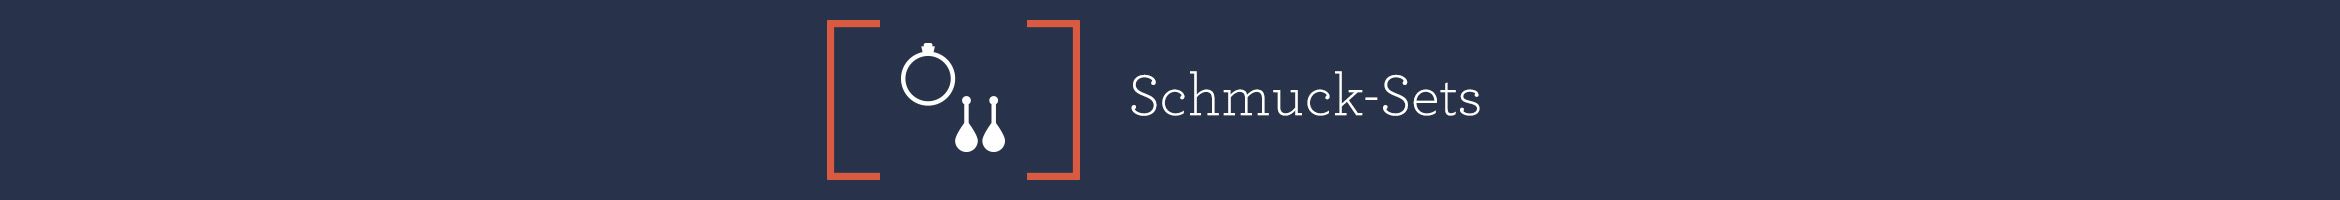 Schmuck-Sets